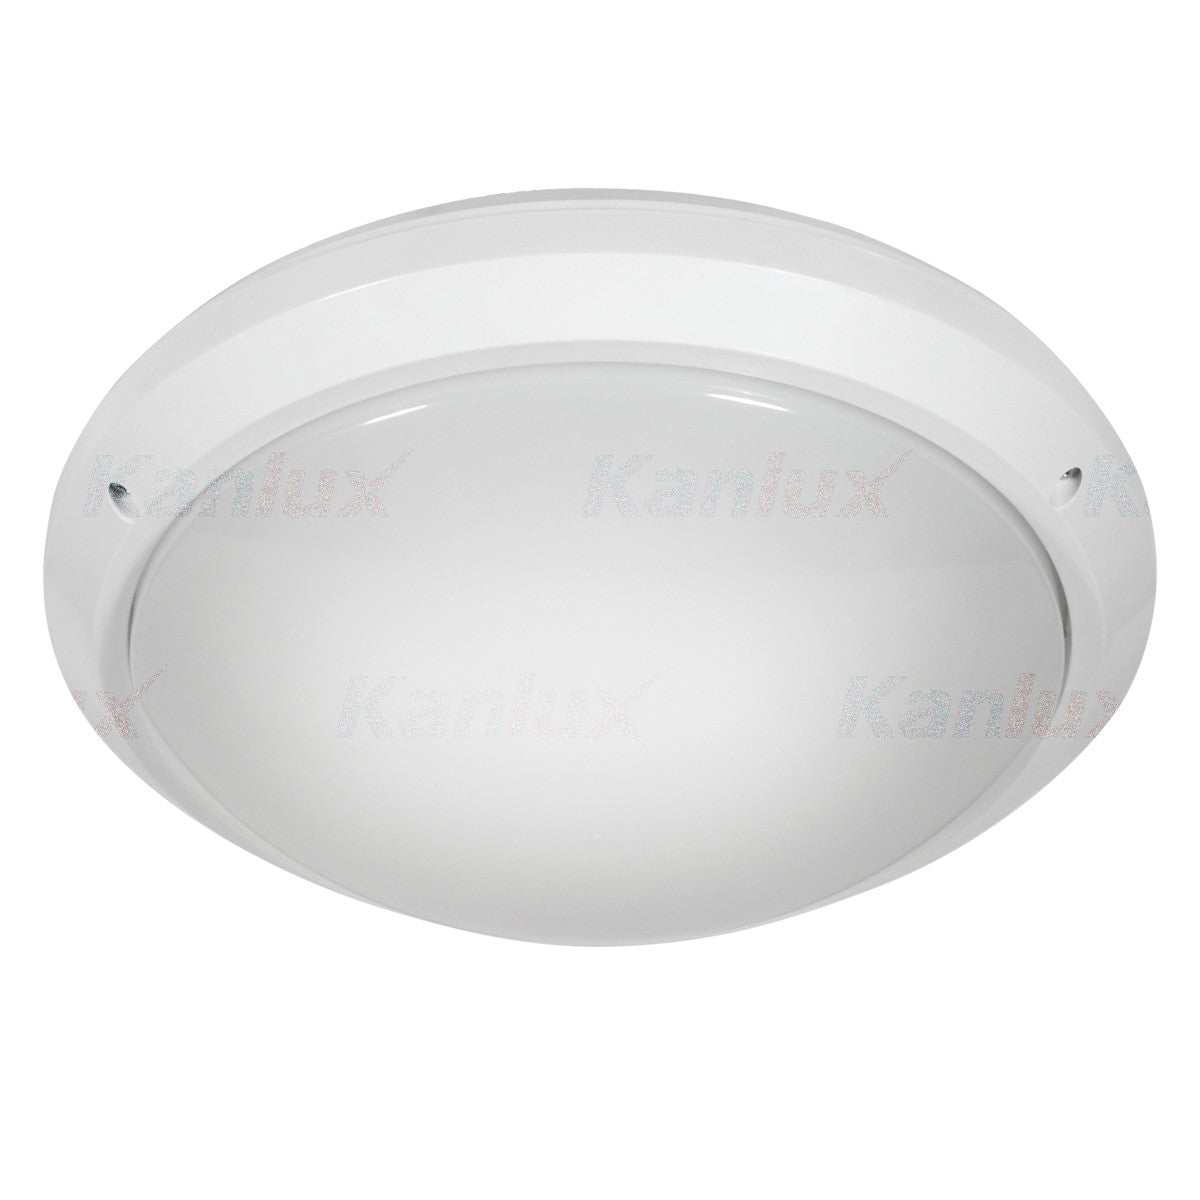 Kanlux MARC E27 Base Outdoor Downlight Hermetic Wall Ceiling Lamp Light IP54